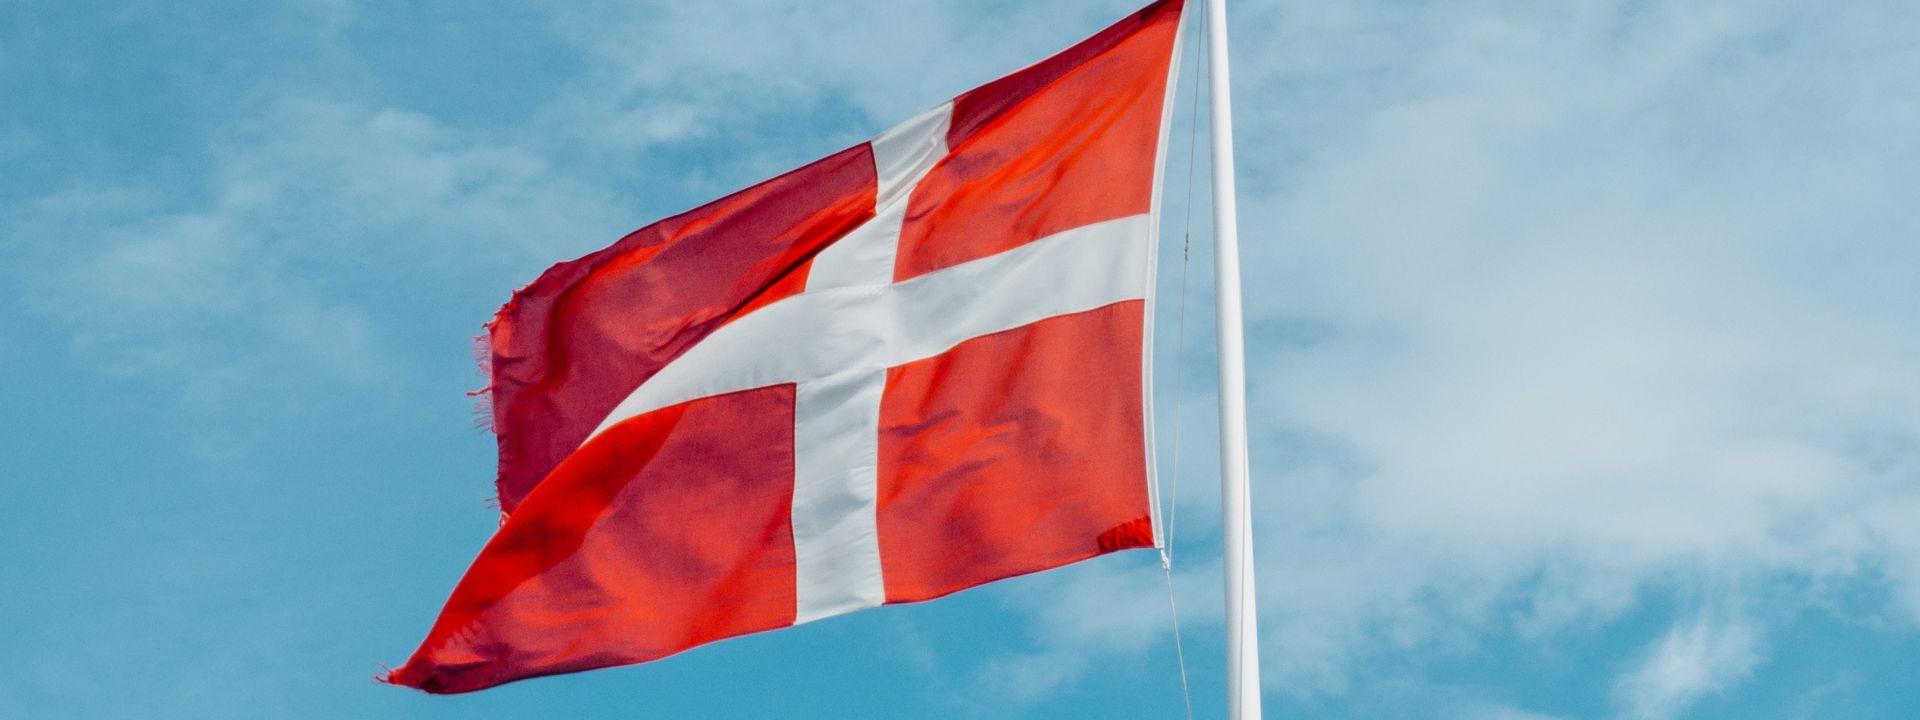 Denmark has fourth-highest rate of online gambling in Europe